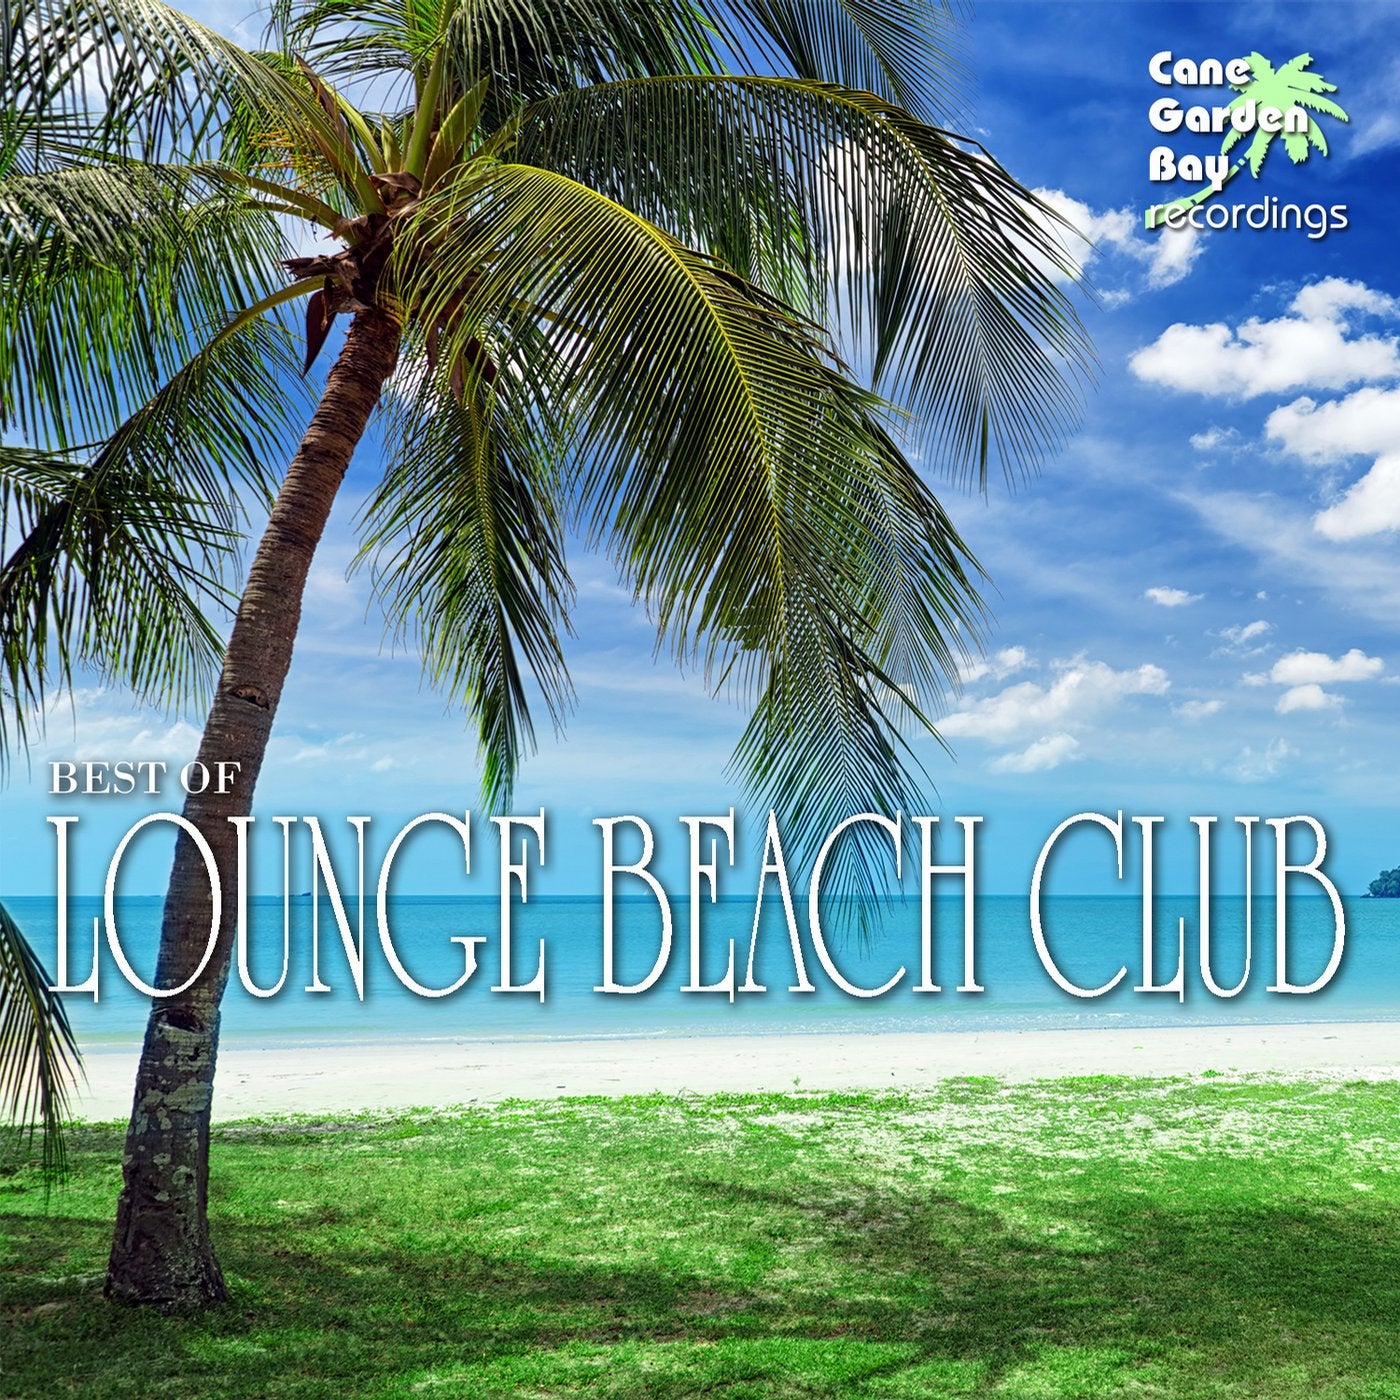 Best of Lounge Beach Club